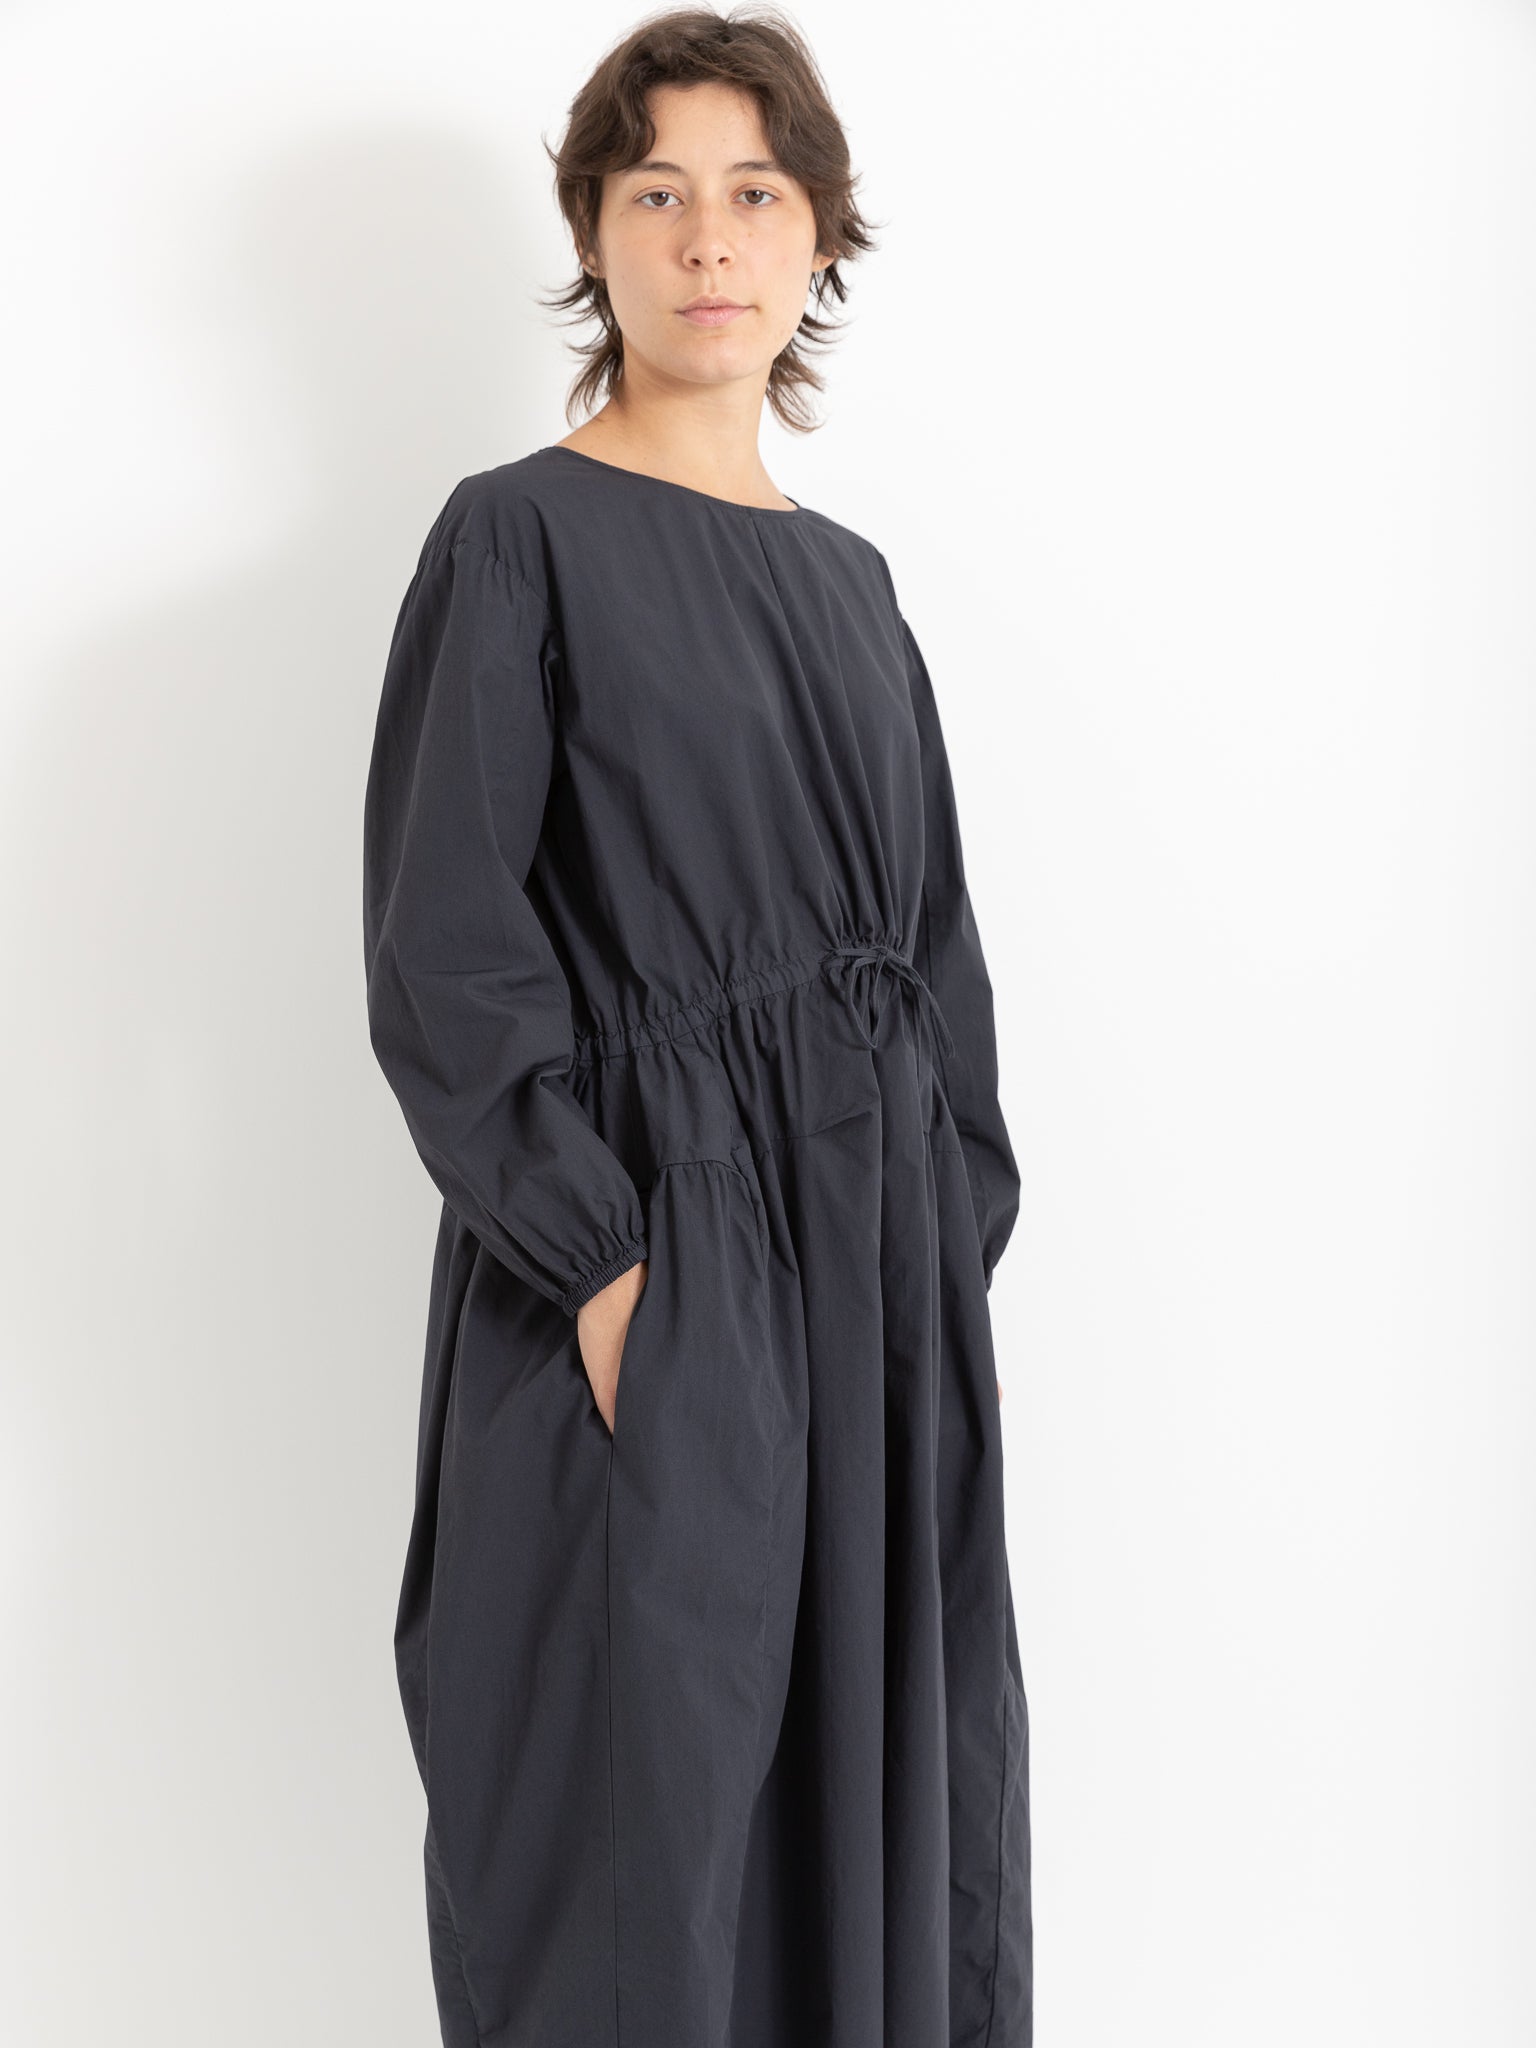 Manuelle Guibal Crino Dress, Ultra Dark - Worthwhile